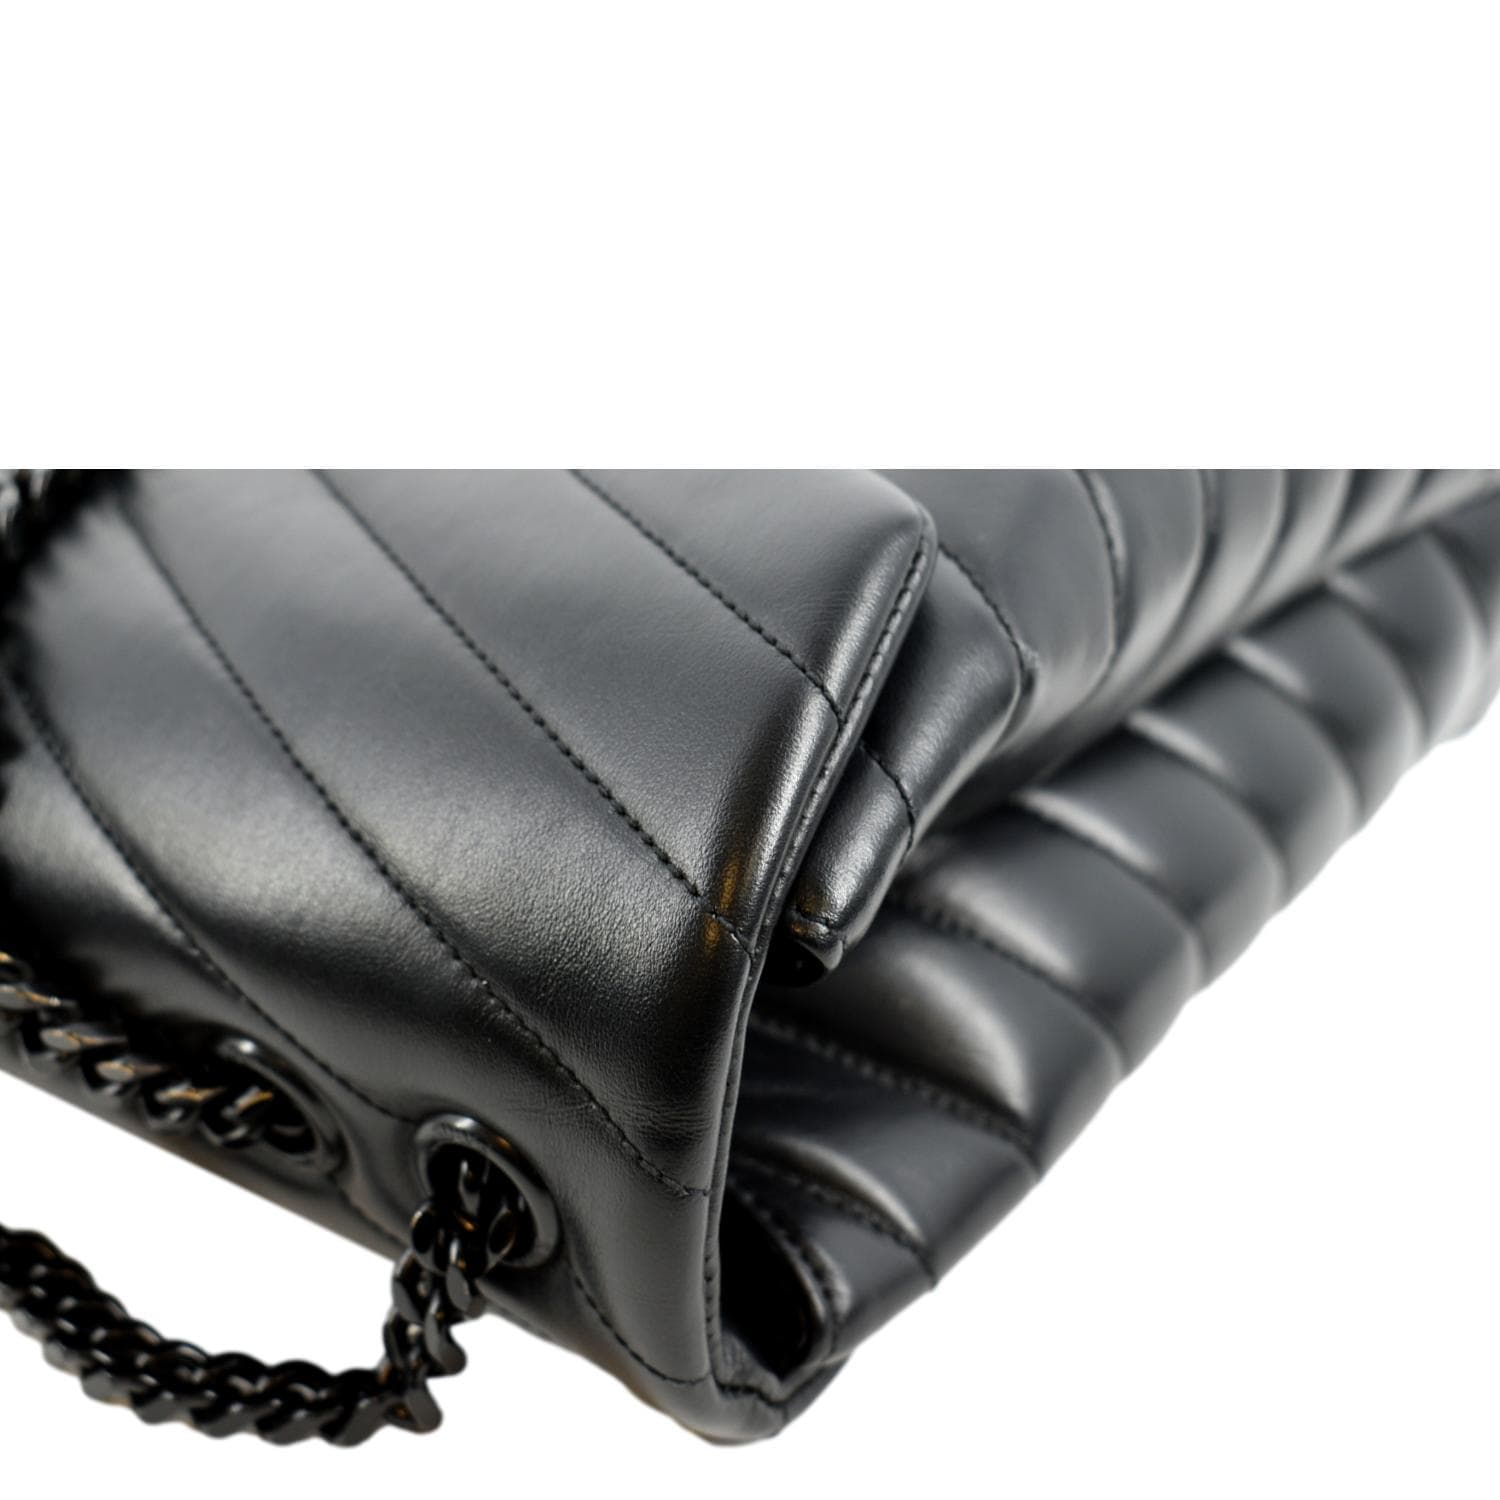 Chanel So Black Chevron Large Classic Double Flap Bag